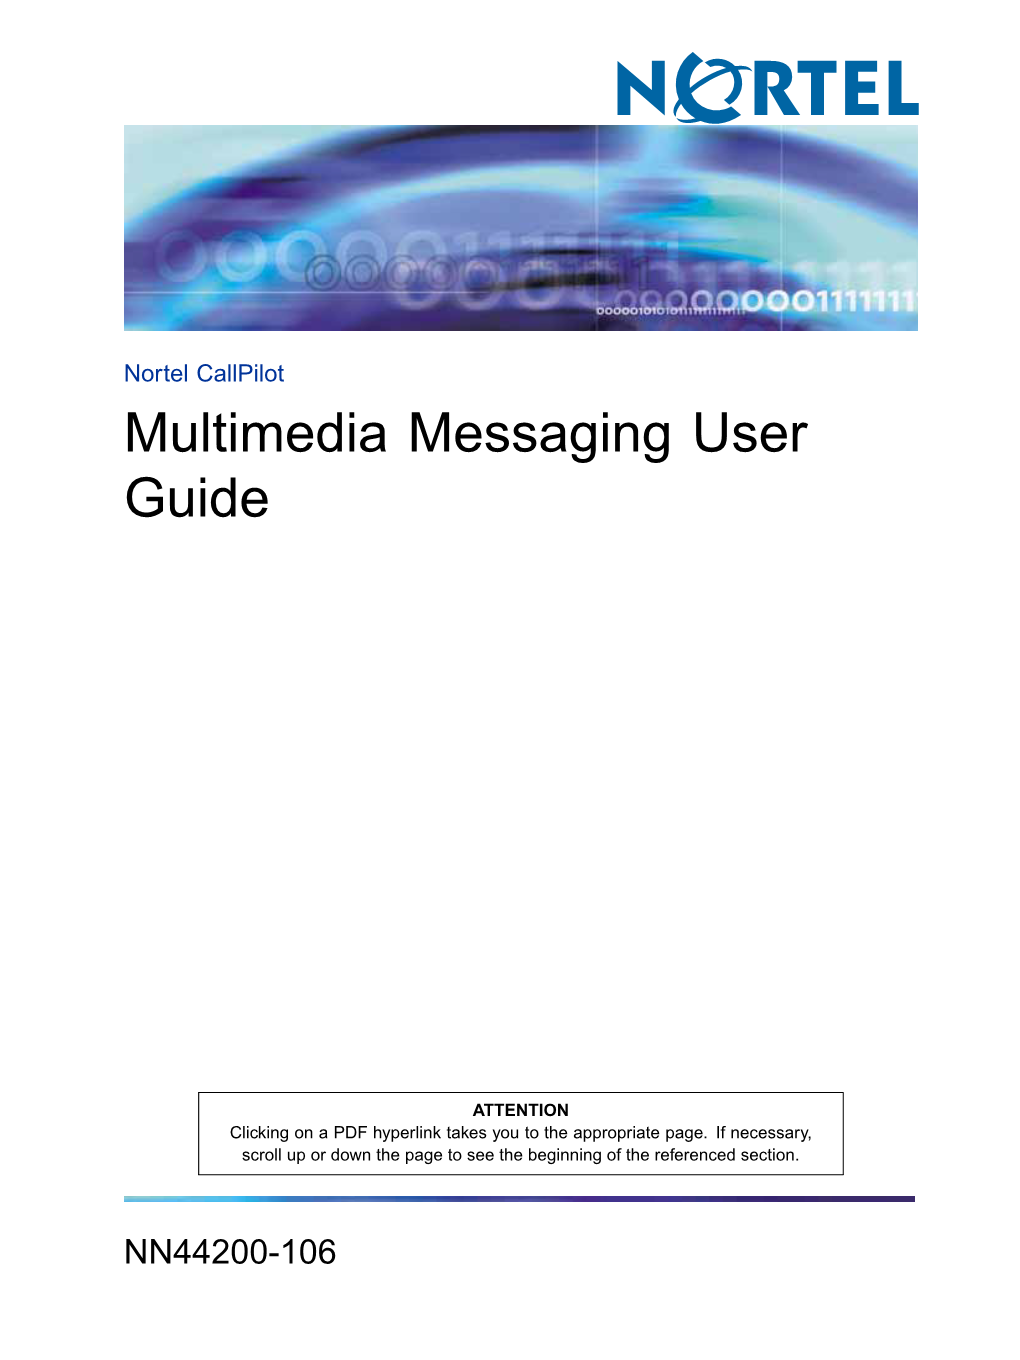 Multimedia Messaging User Guide